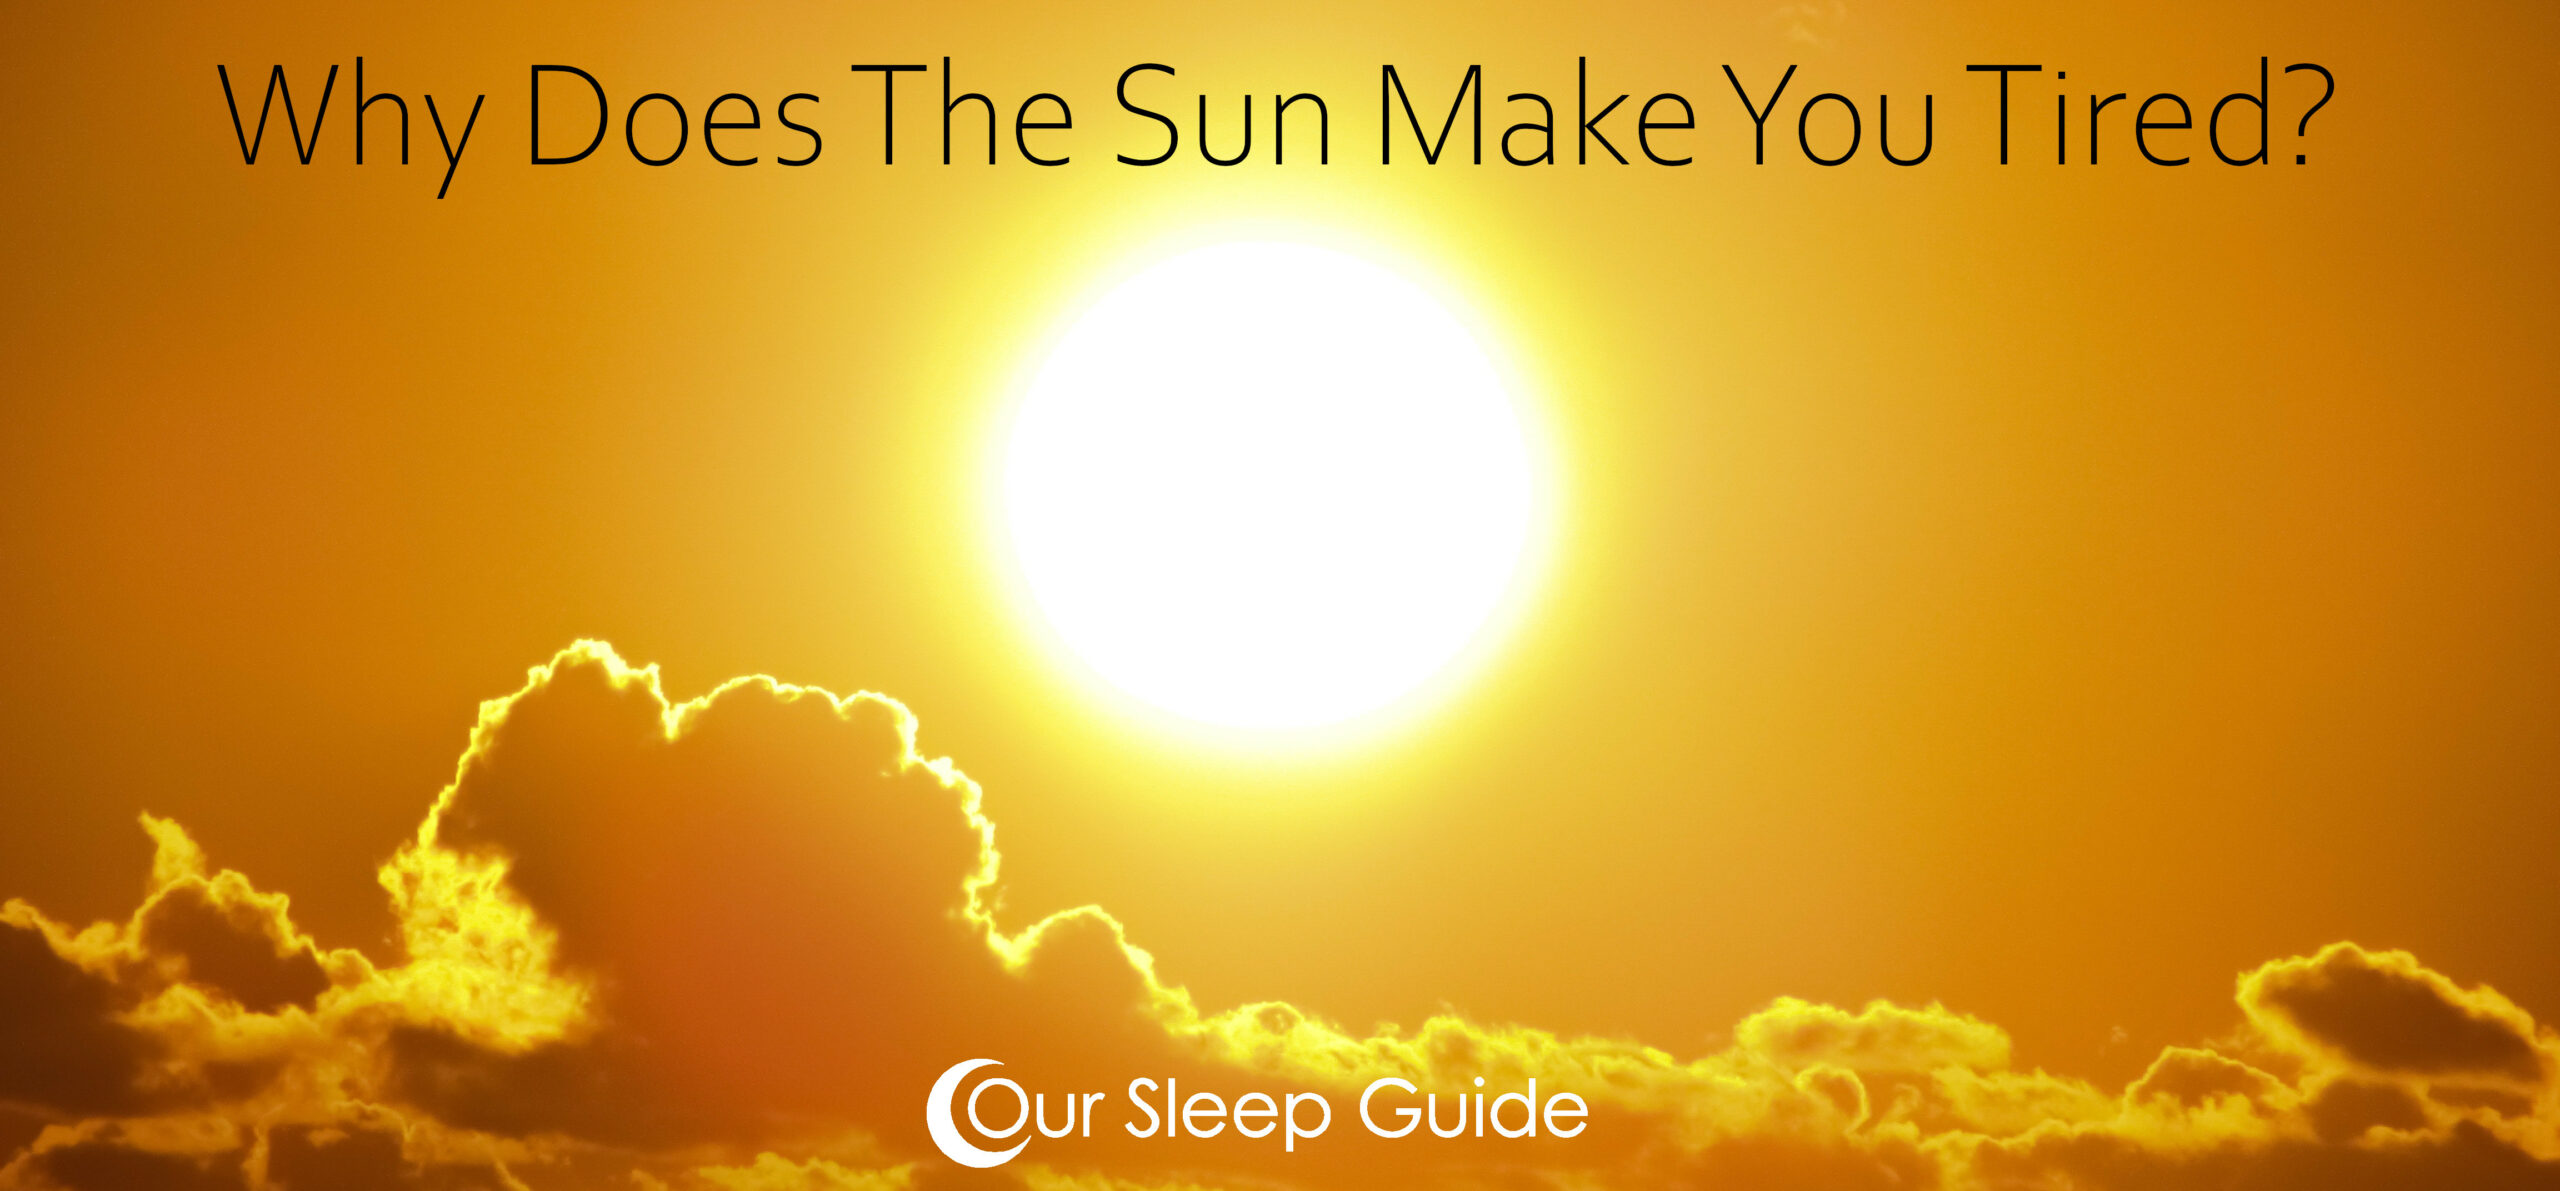 sunshine our sleep guide tips